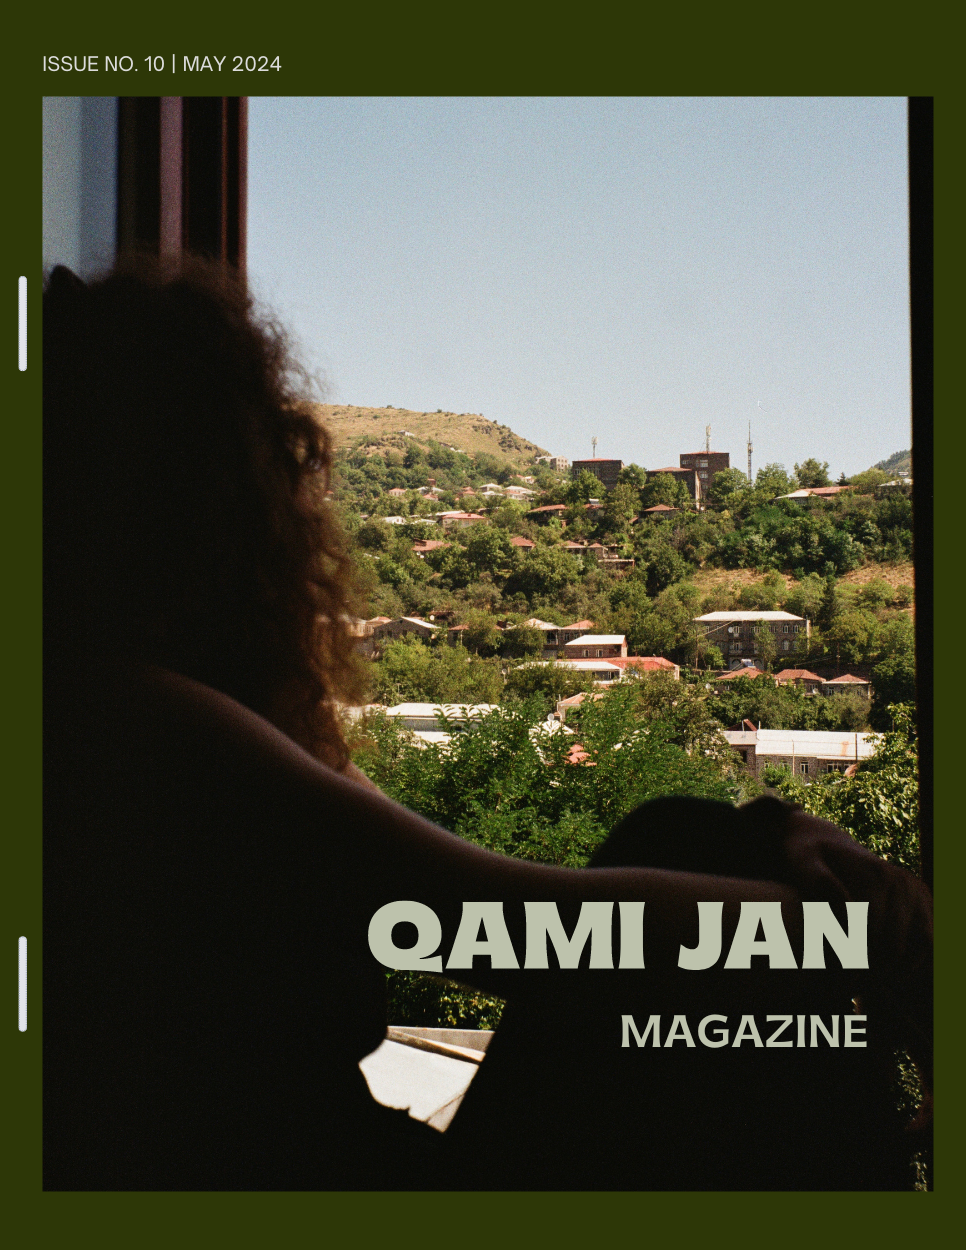 One year of QAMI JAN Digital Magazine (International)